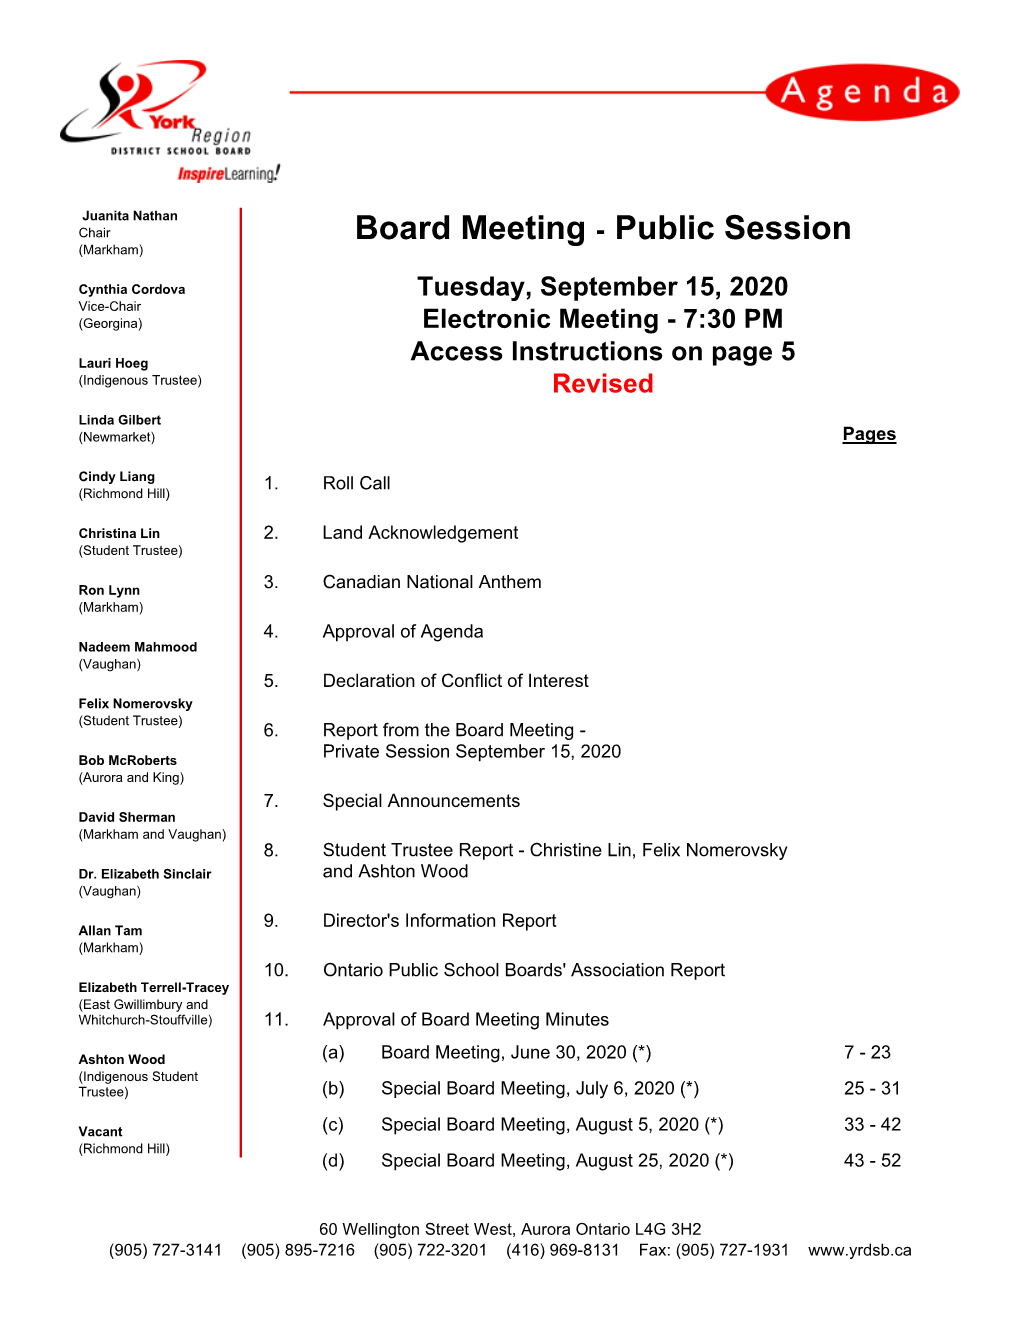 Board Meeting - Public Session (Markham)